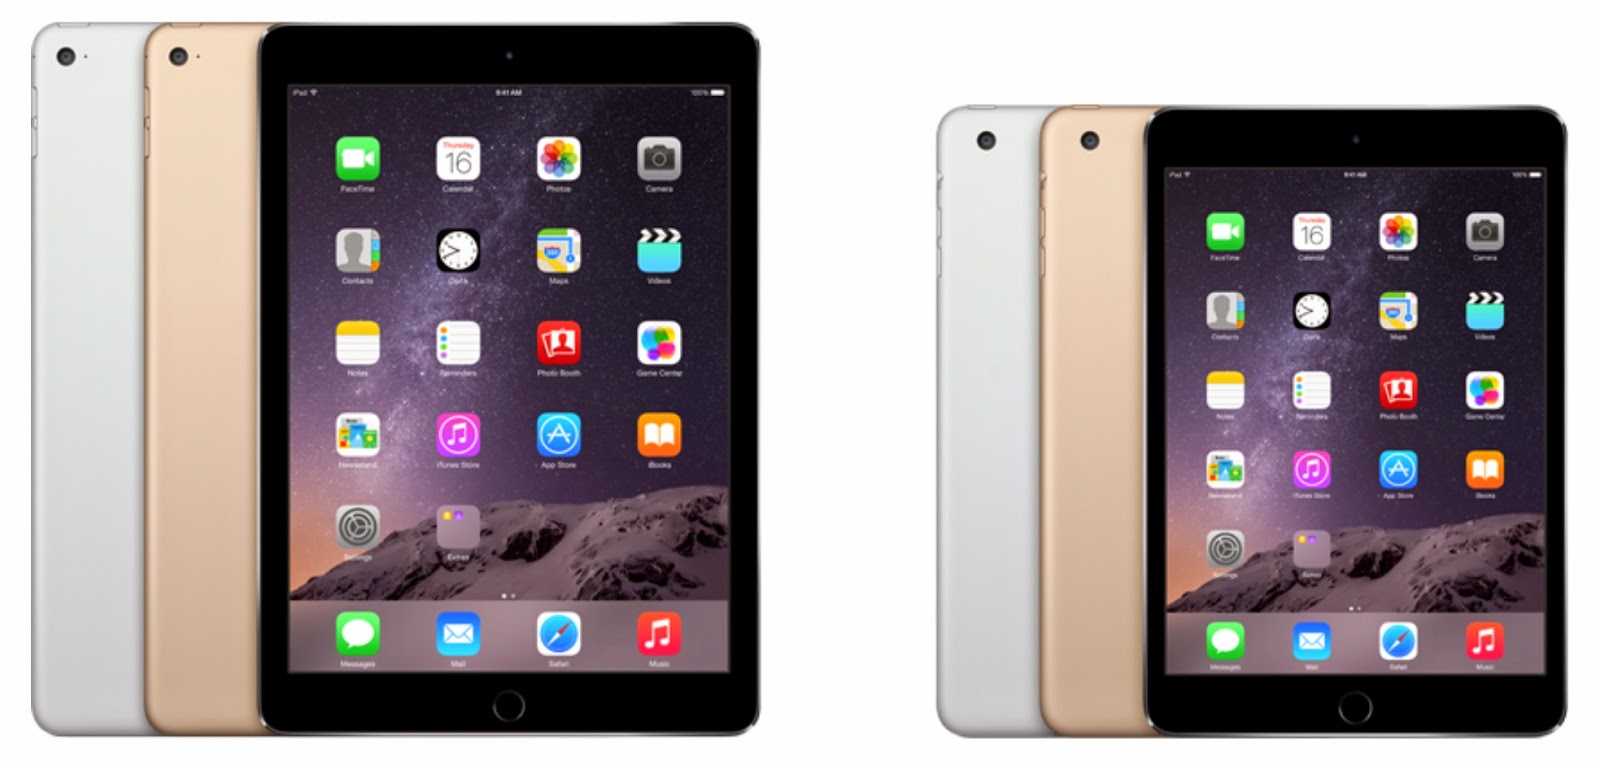 Apple iPad Air 2 and iPad Mini 3